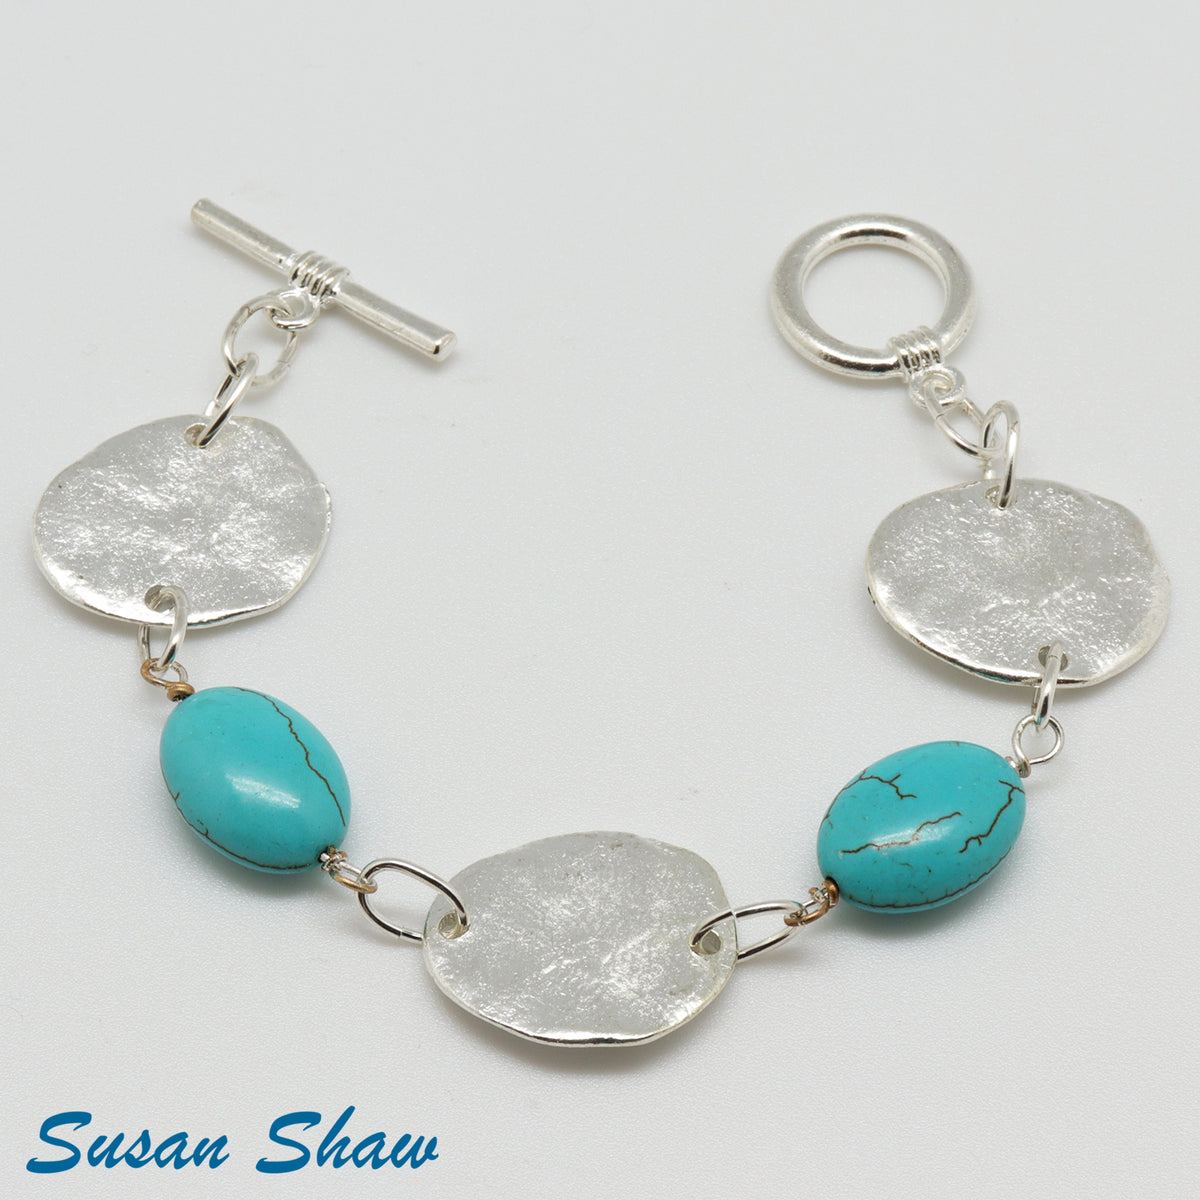 Susan Shaw Bracelet: Silver & Turquoise